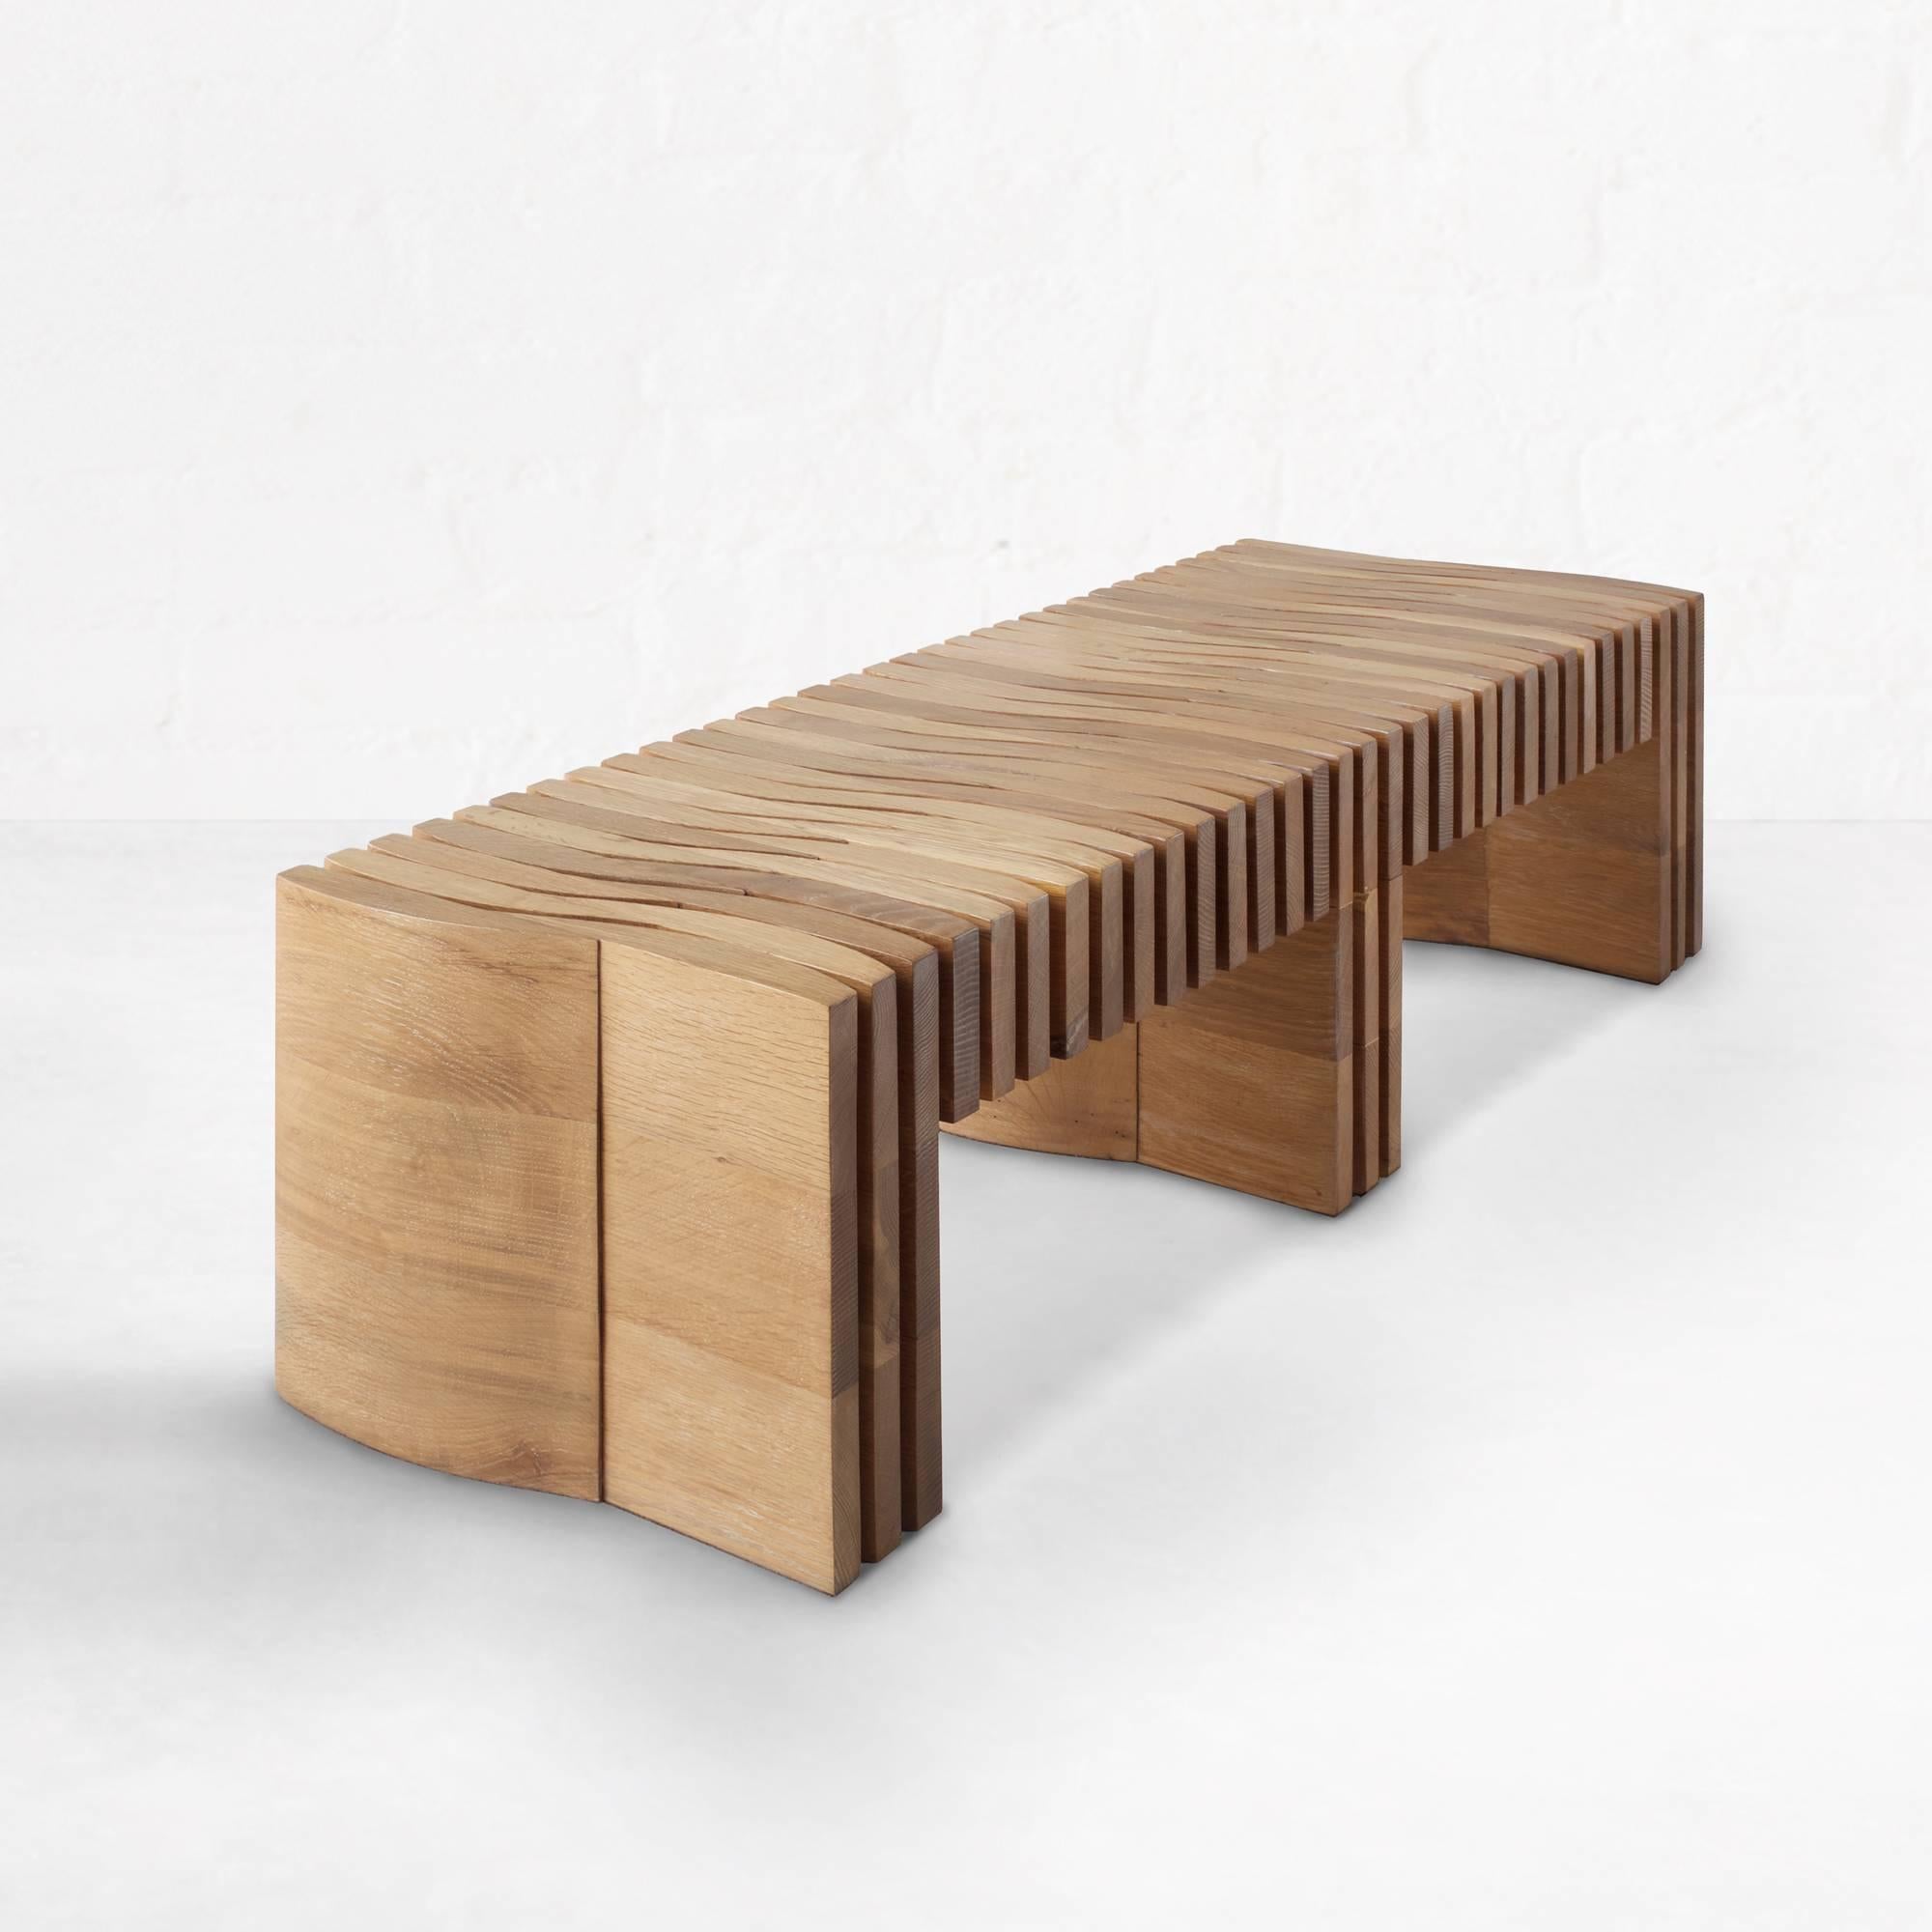 custom wood benches